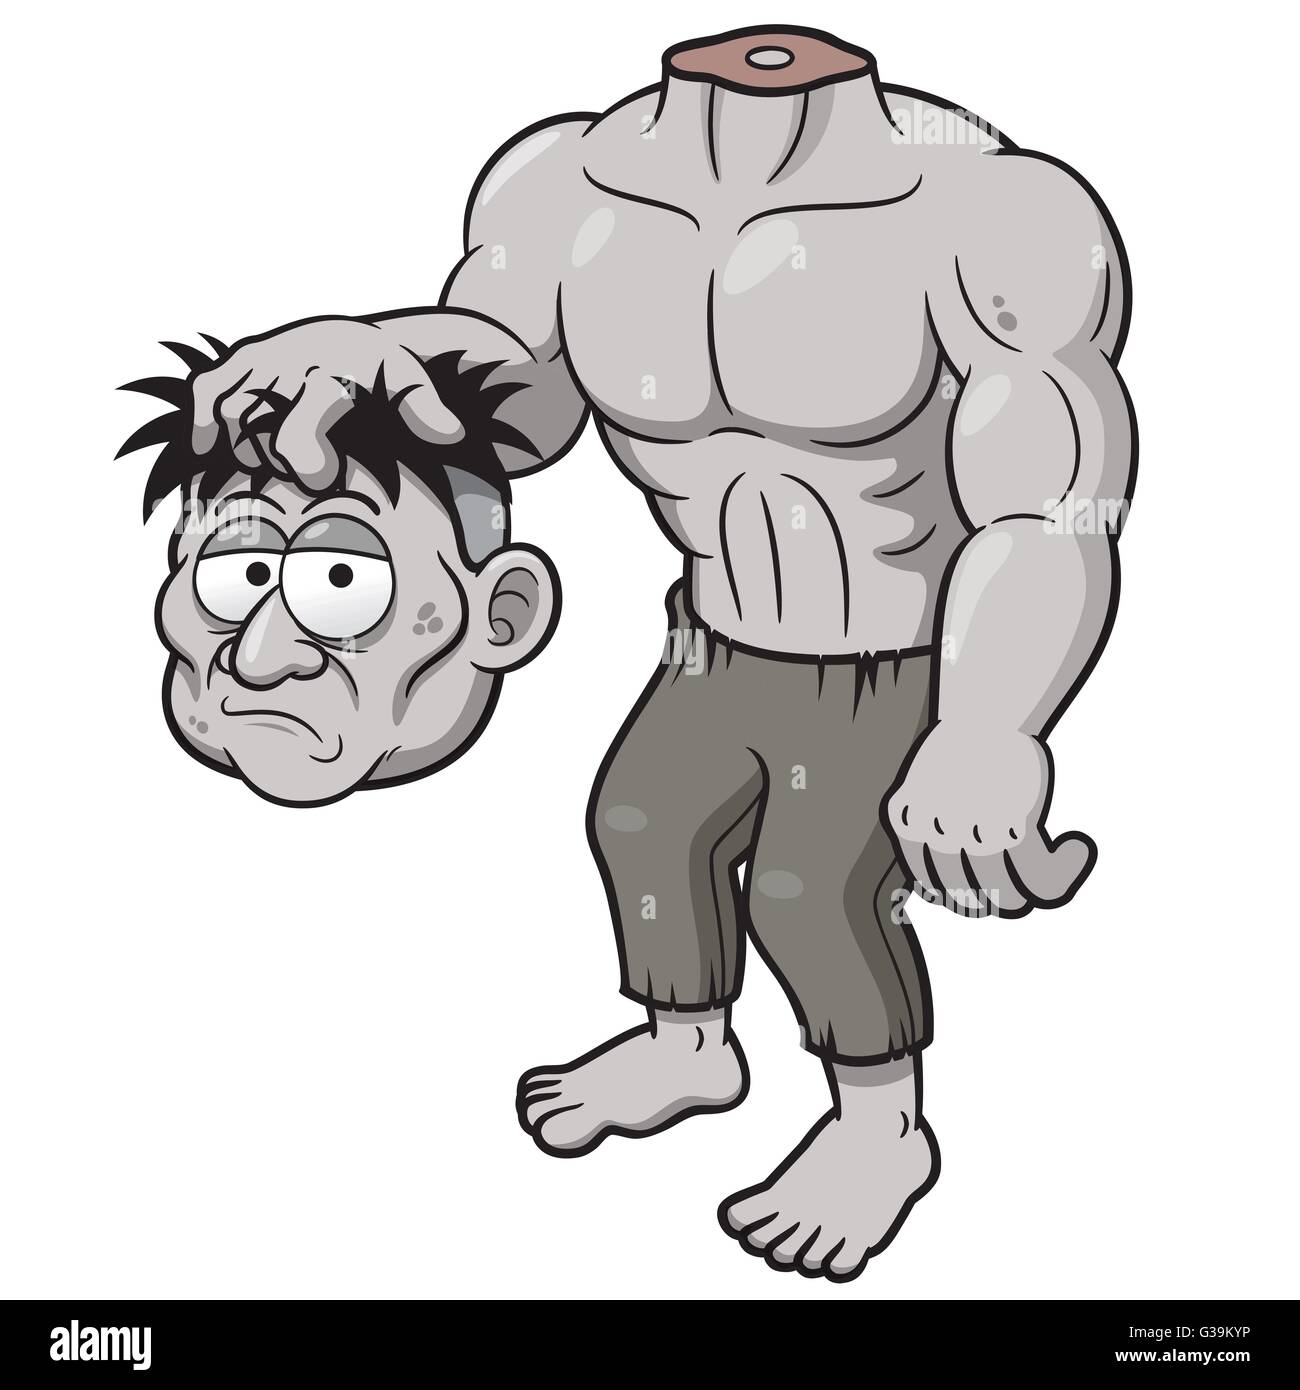 Vecteur d'illustration de Cartoon headless Zombie Illustration de Vecteur